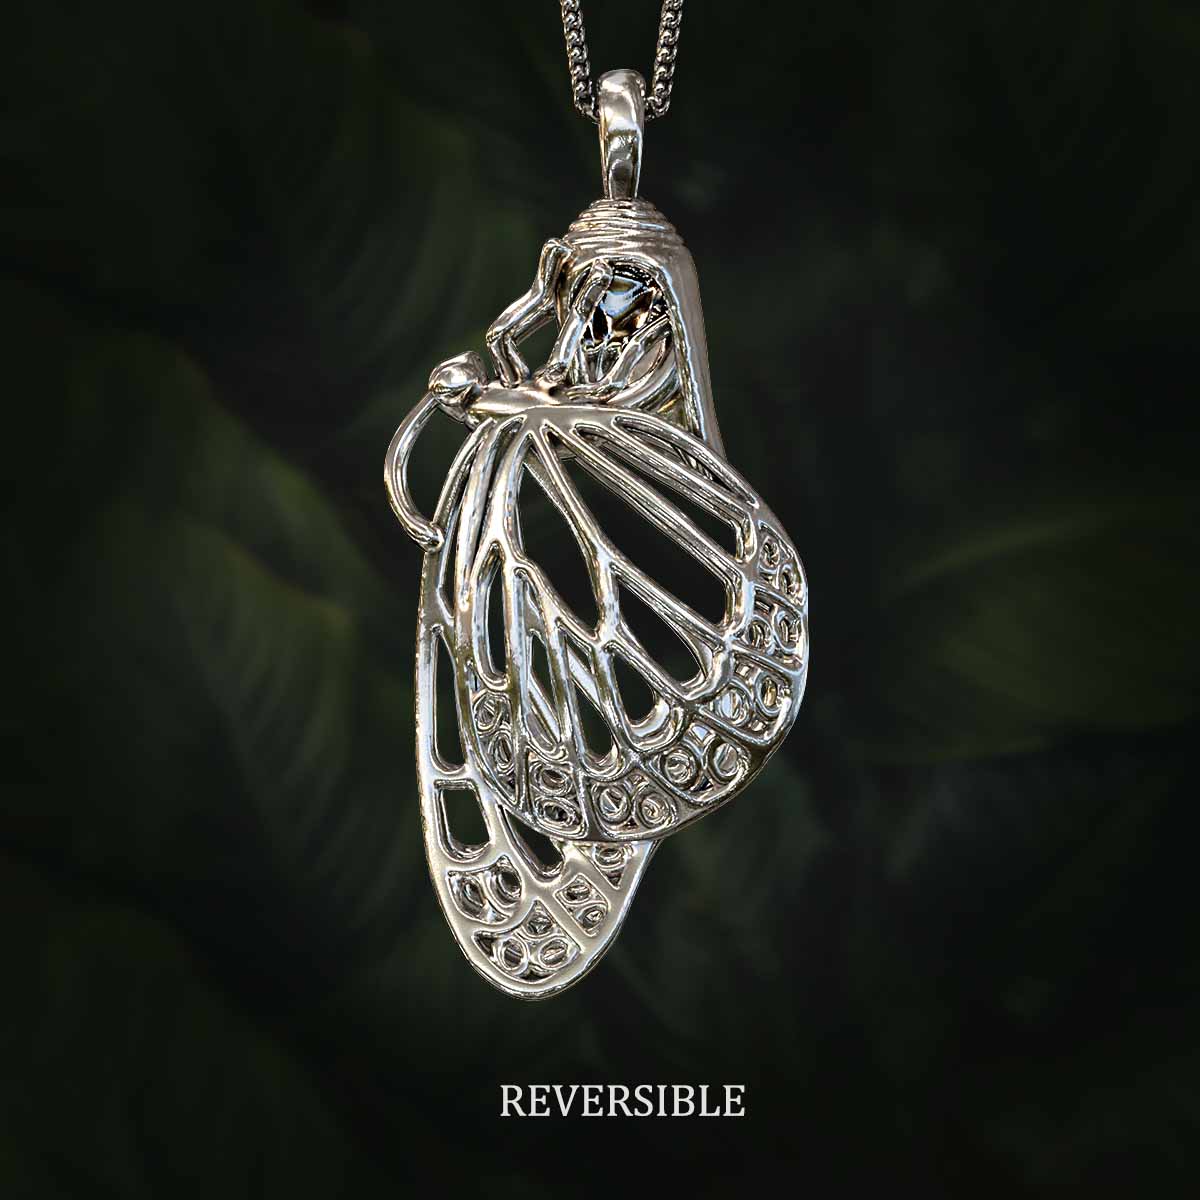 Reverse-Image-White-Gold-Rhodium-Finish-Monarch-Chrysalis-Pendant-Jewelry-For-Necklace